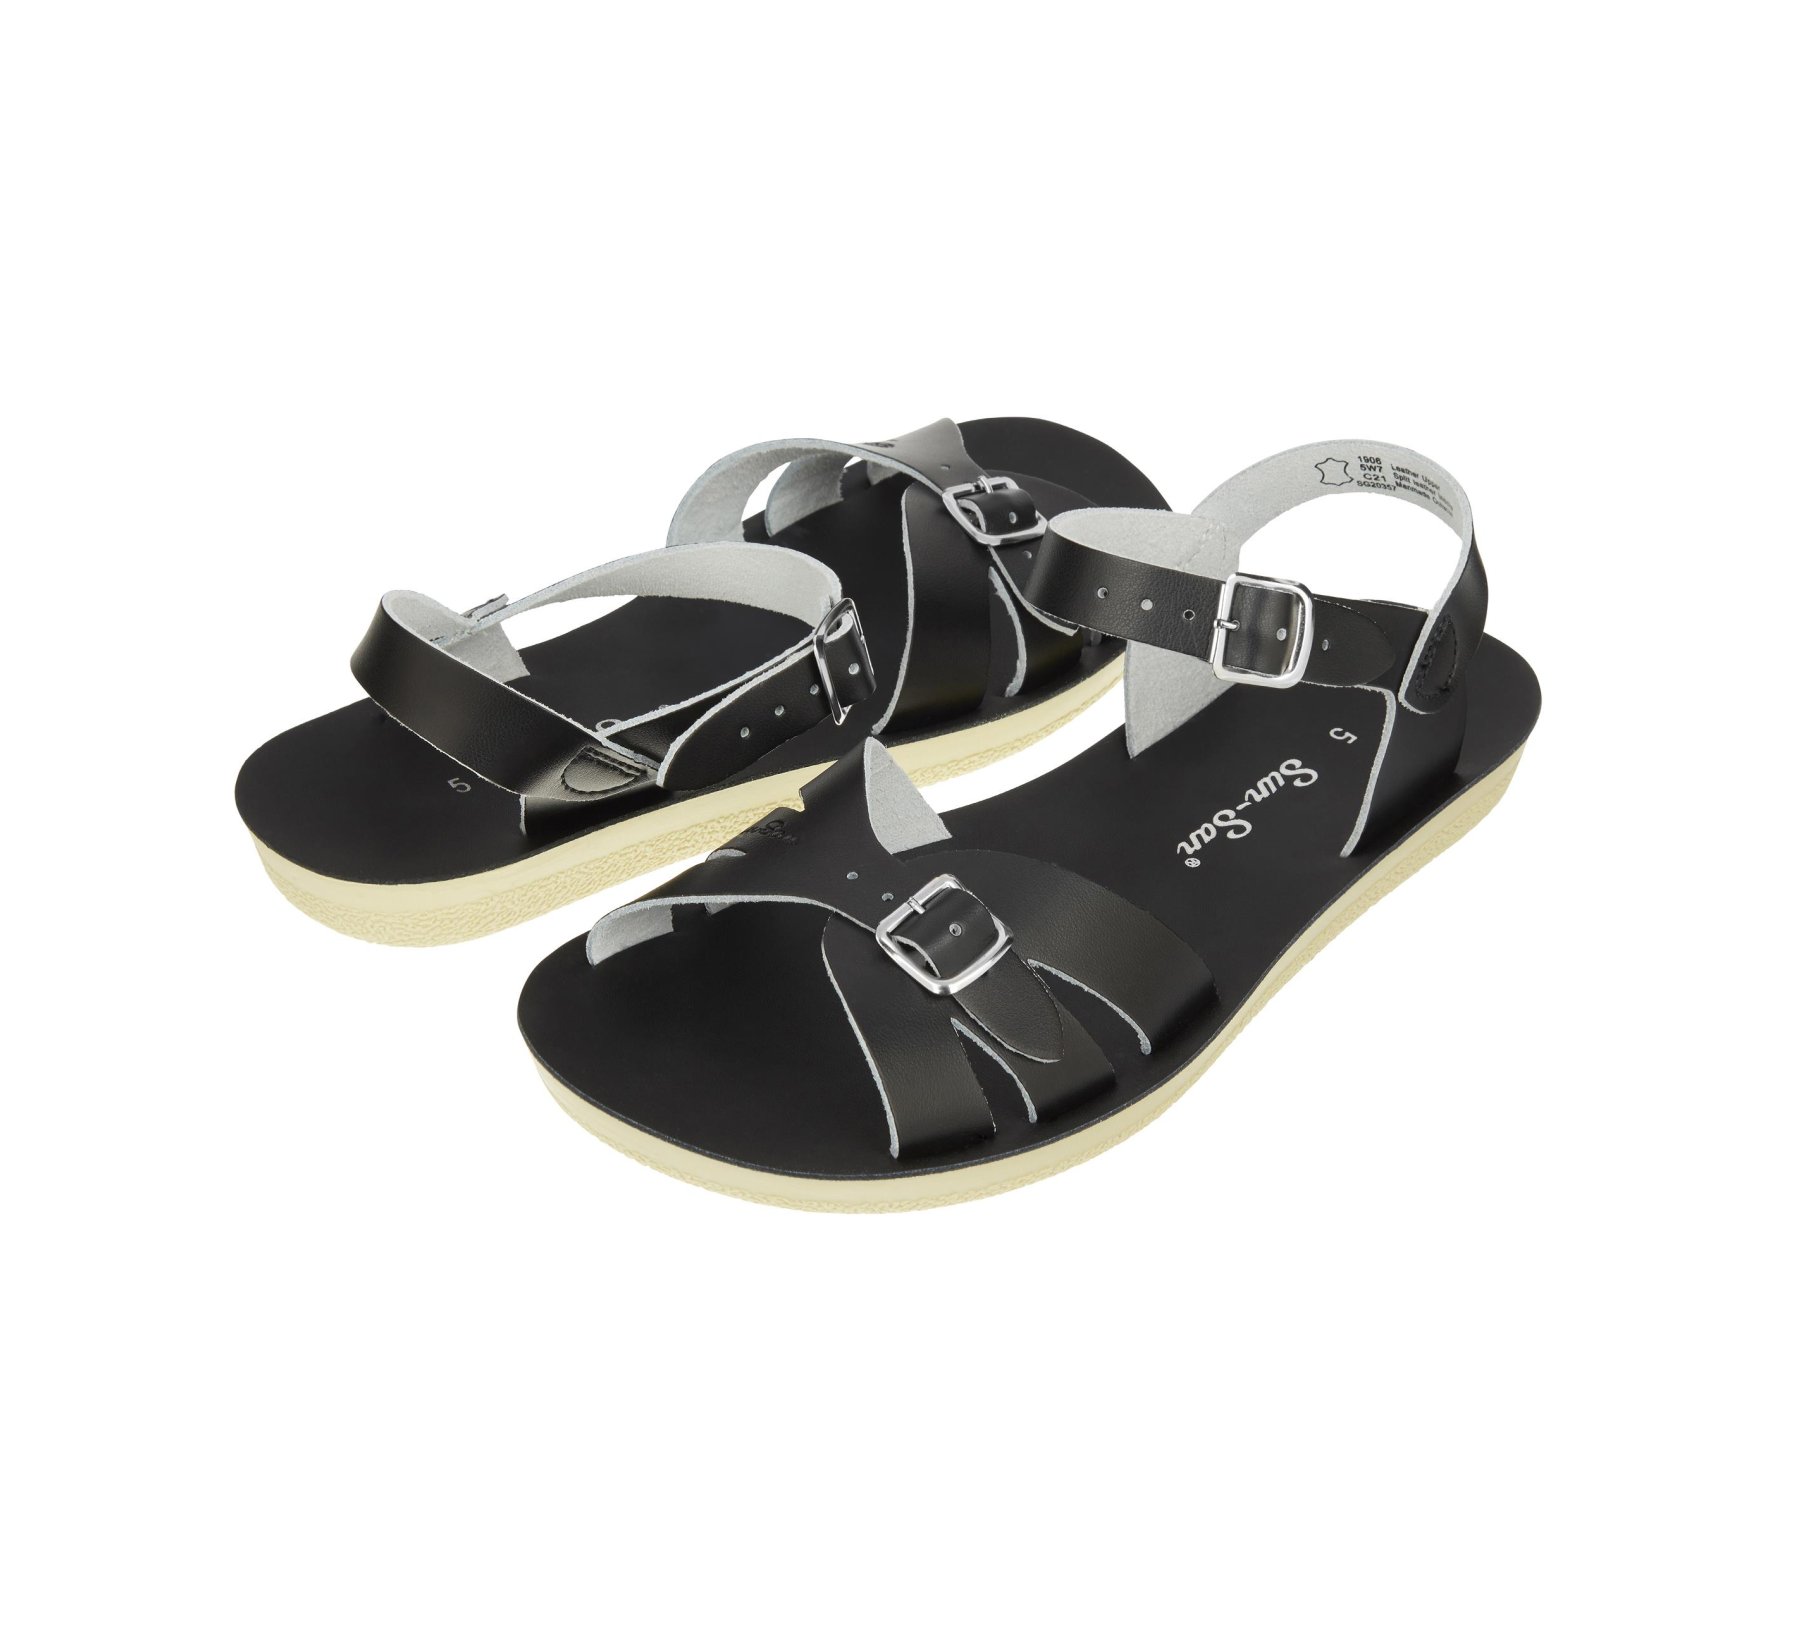 Boardwalk Black Sandal - Salt Water Sandals